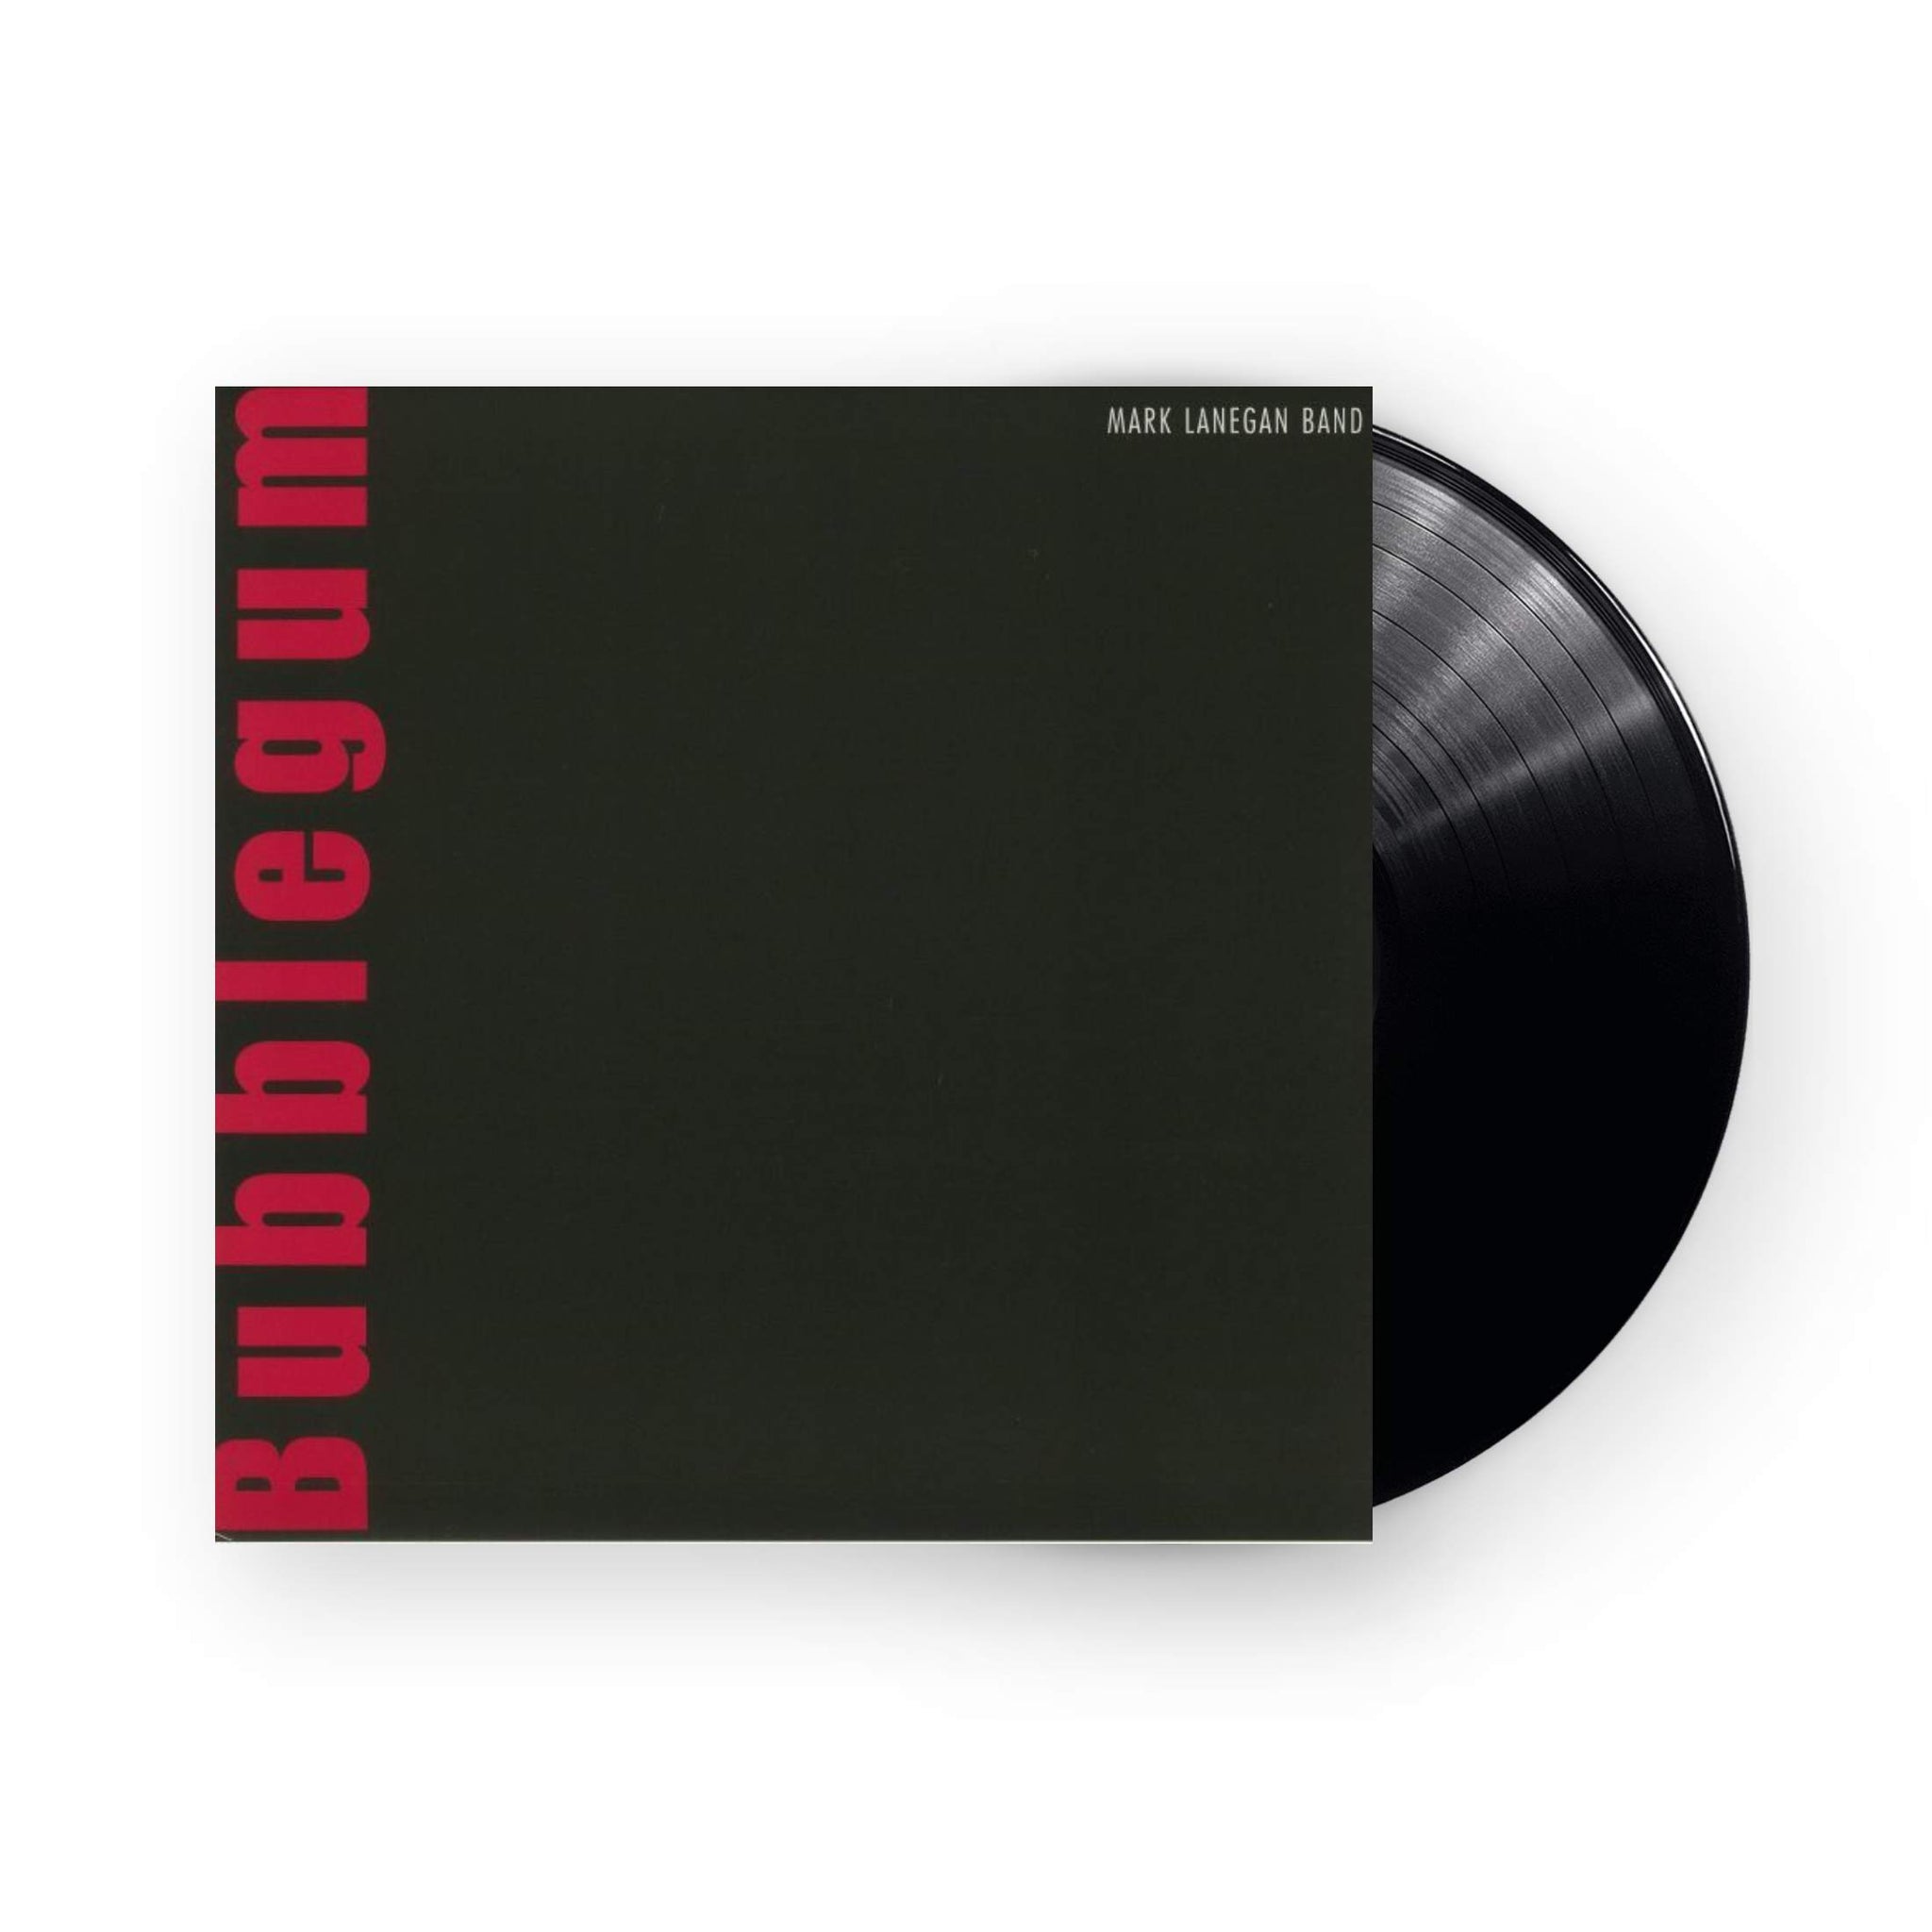 Mark Lanegan Band - Bubblegum LP (Black Vinyl)